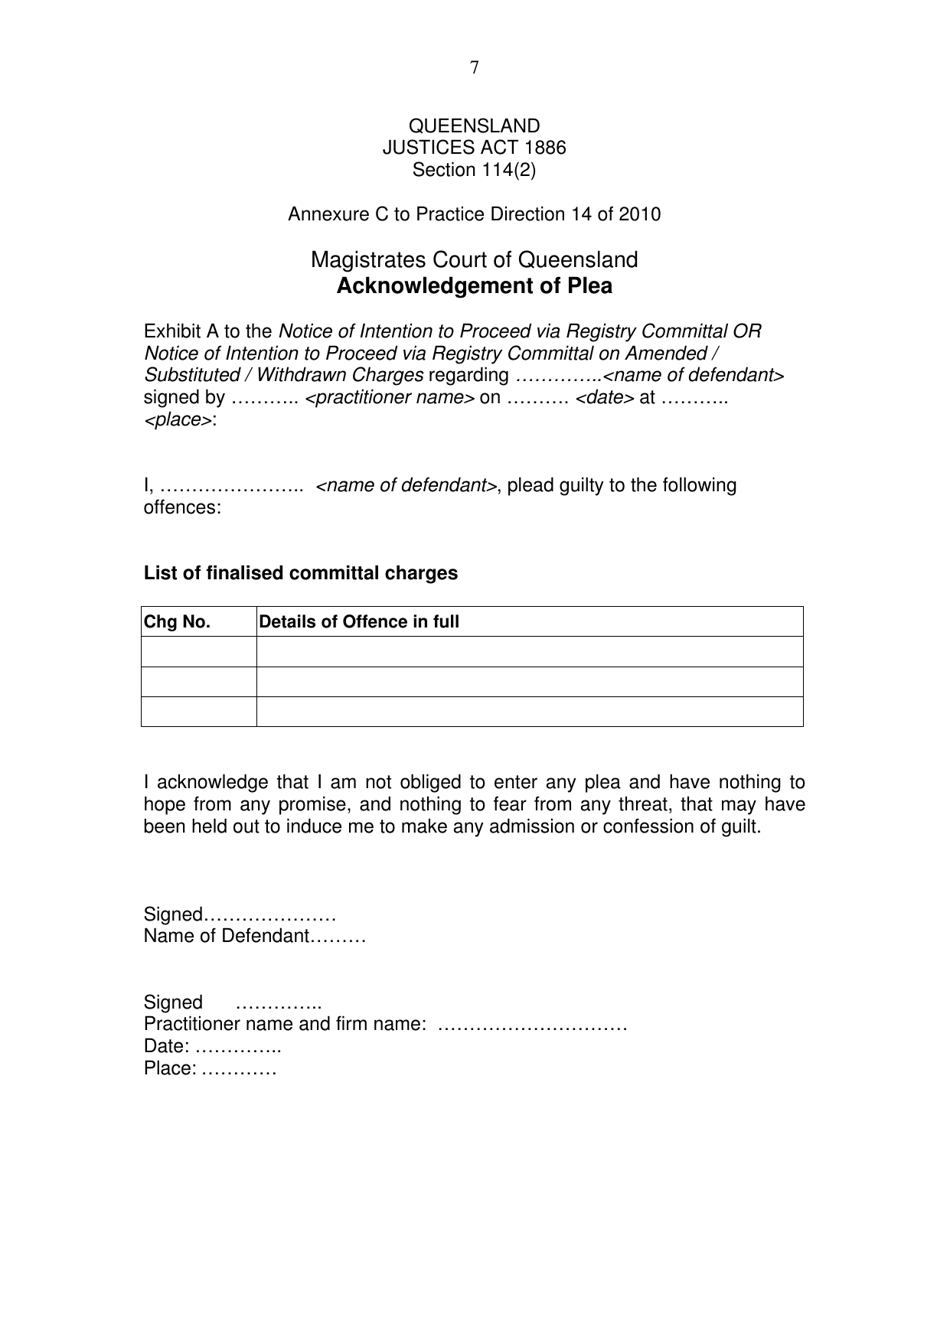 Annexure C Acknowledgement of Plea - Queensland, Australia, Page 1